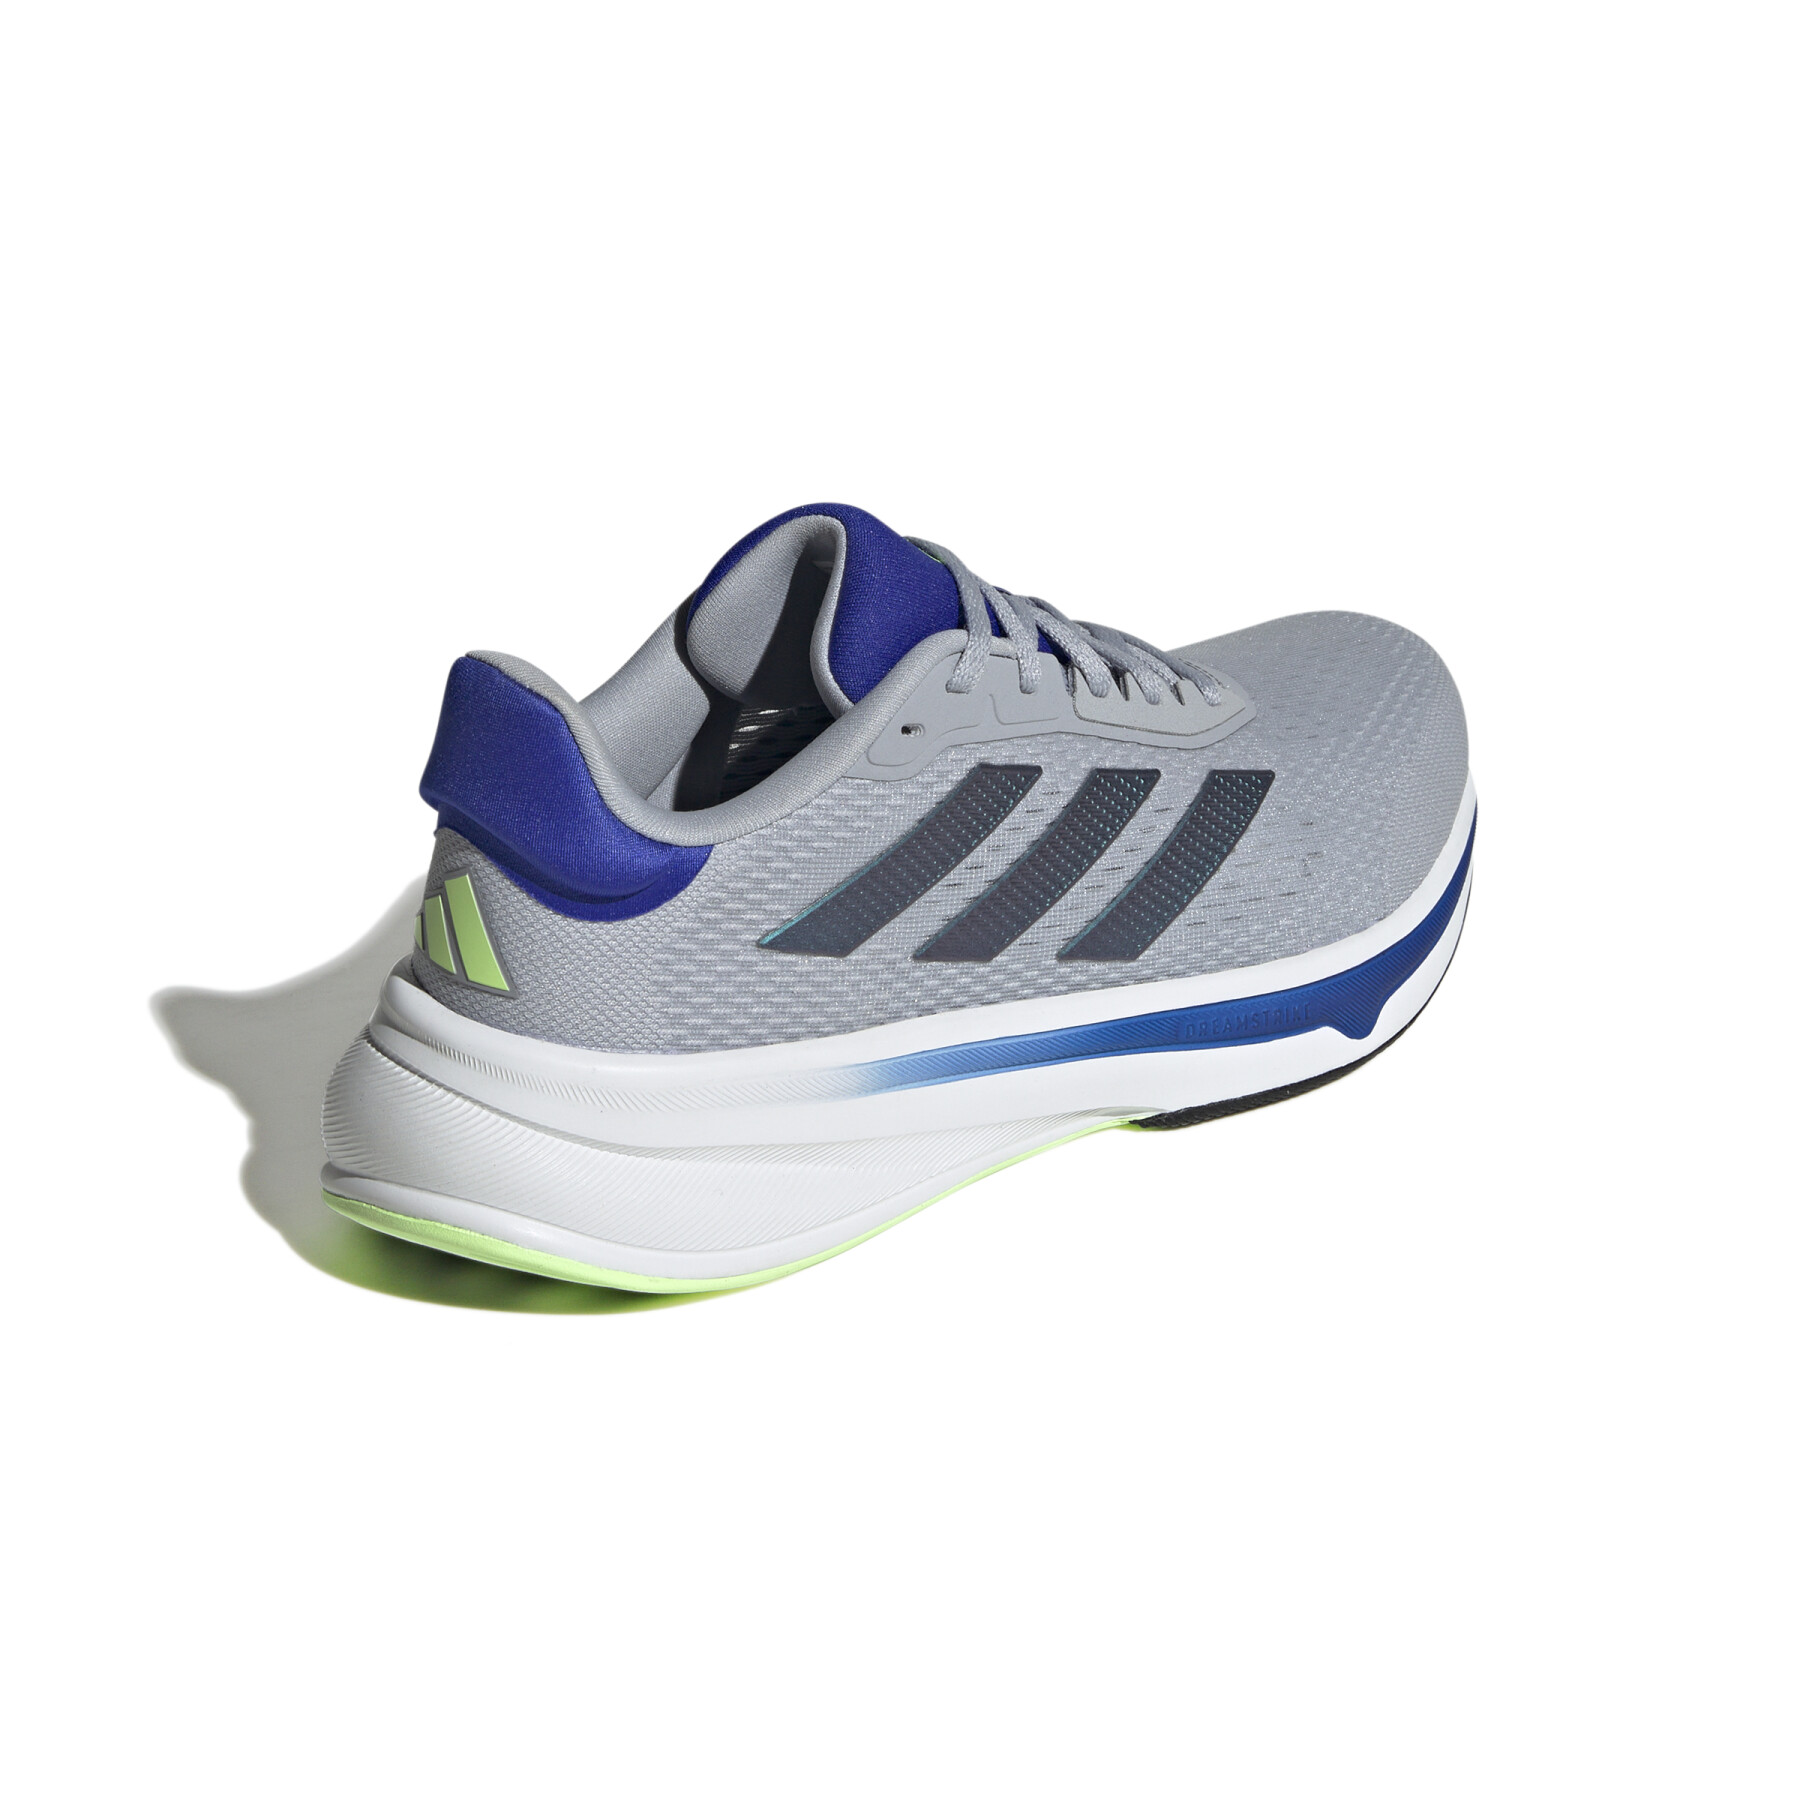 Running shoes adidas Response Super